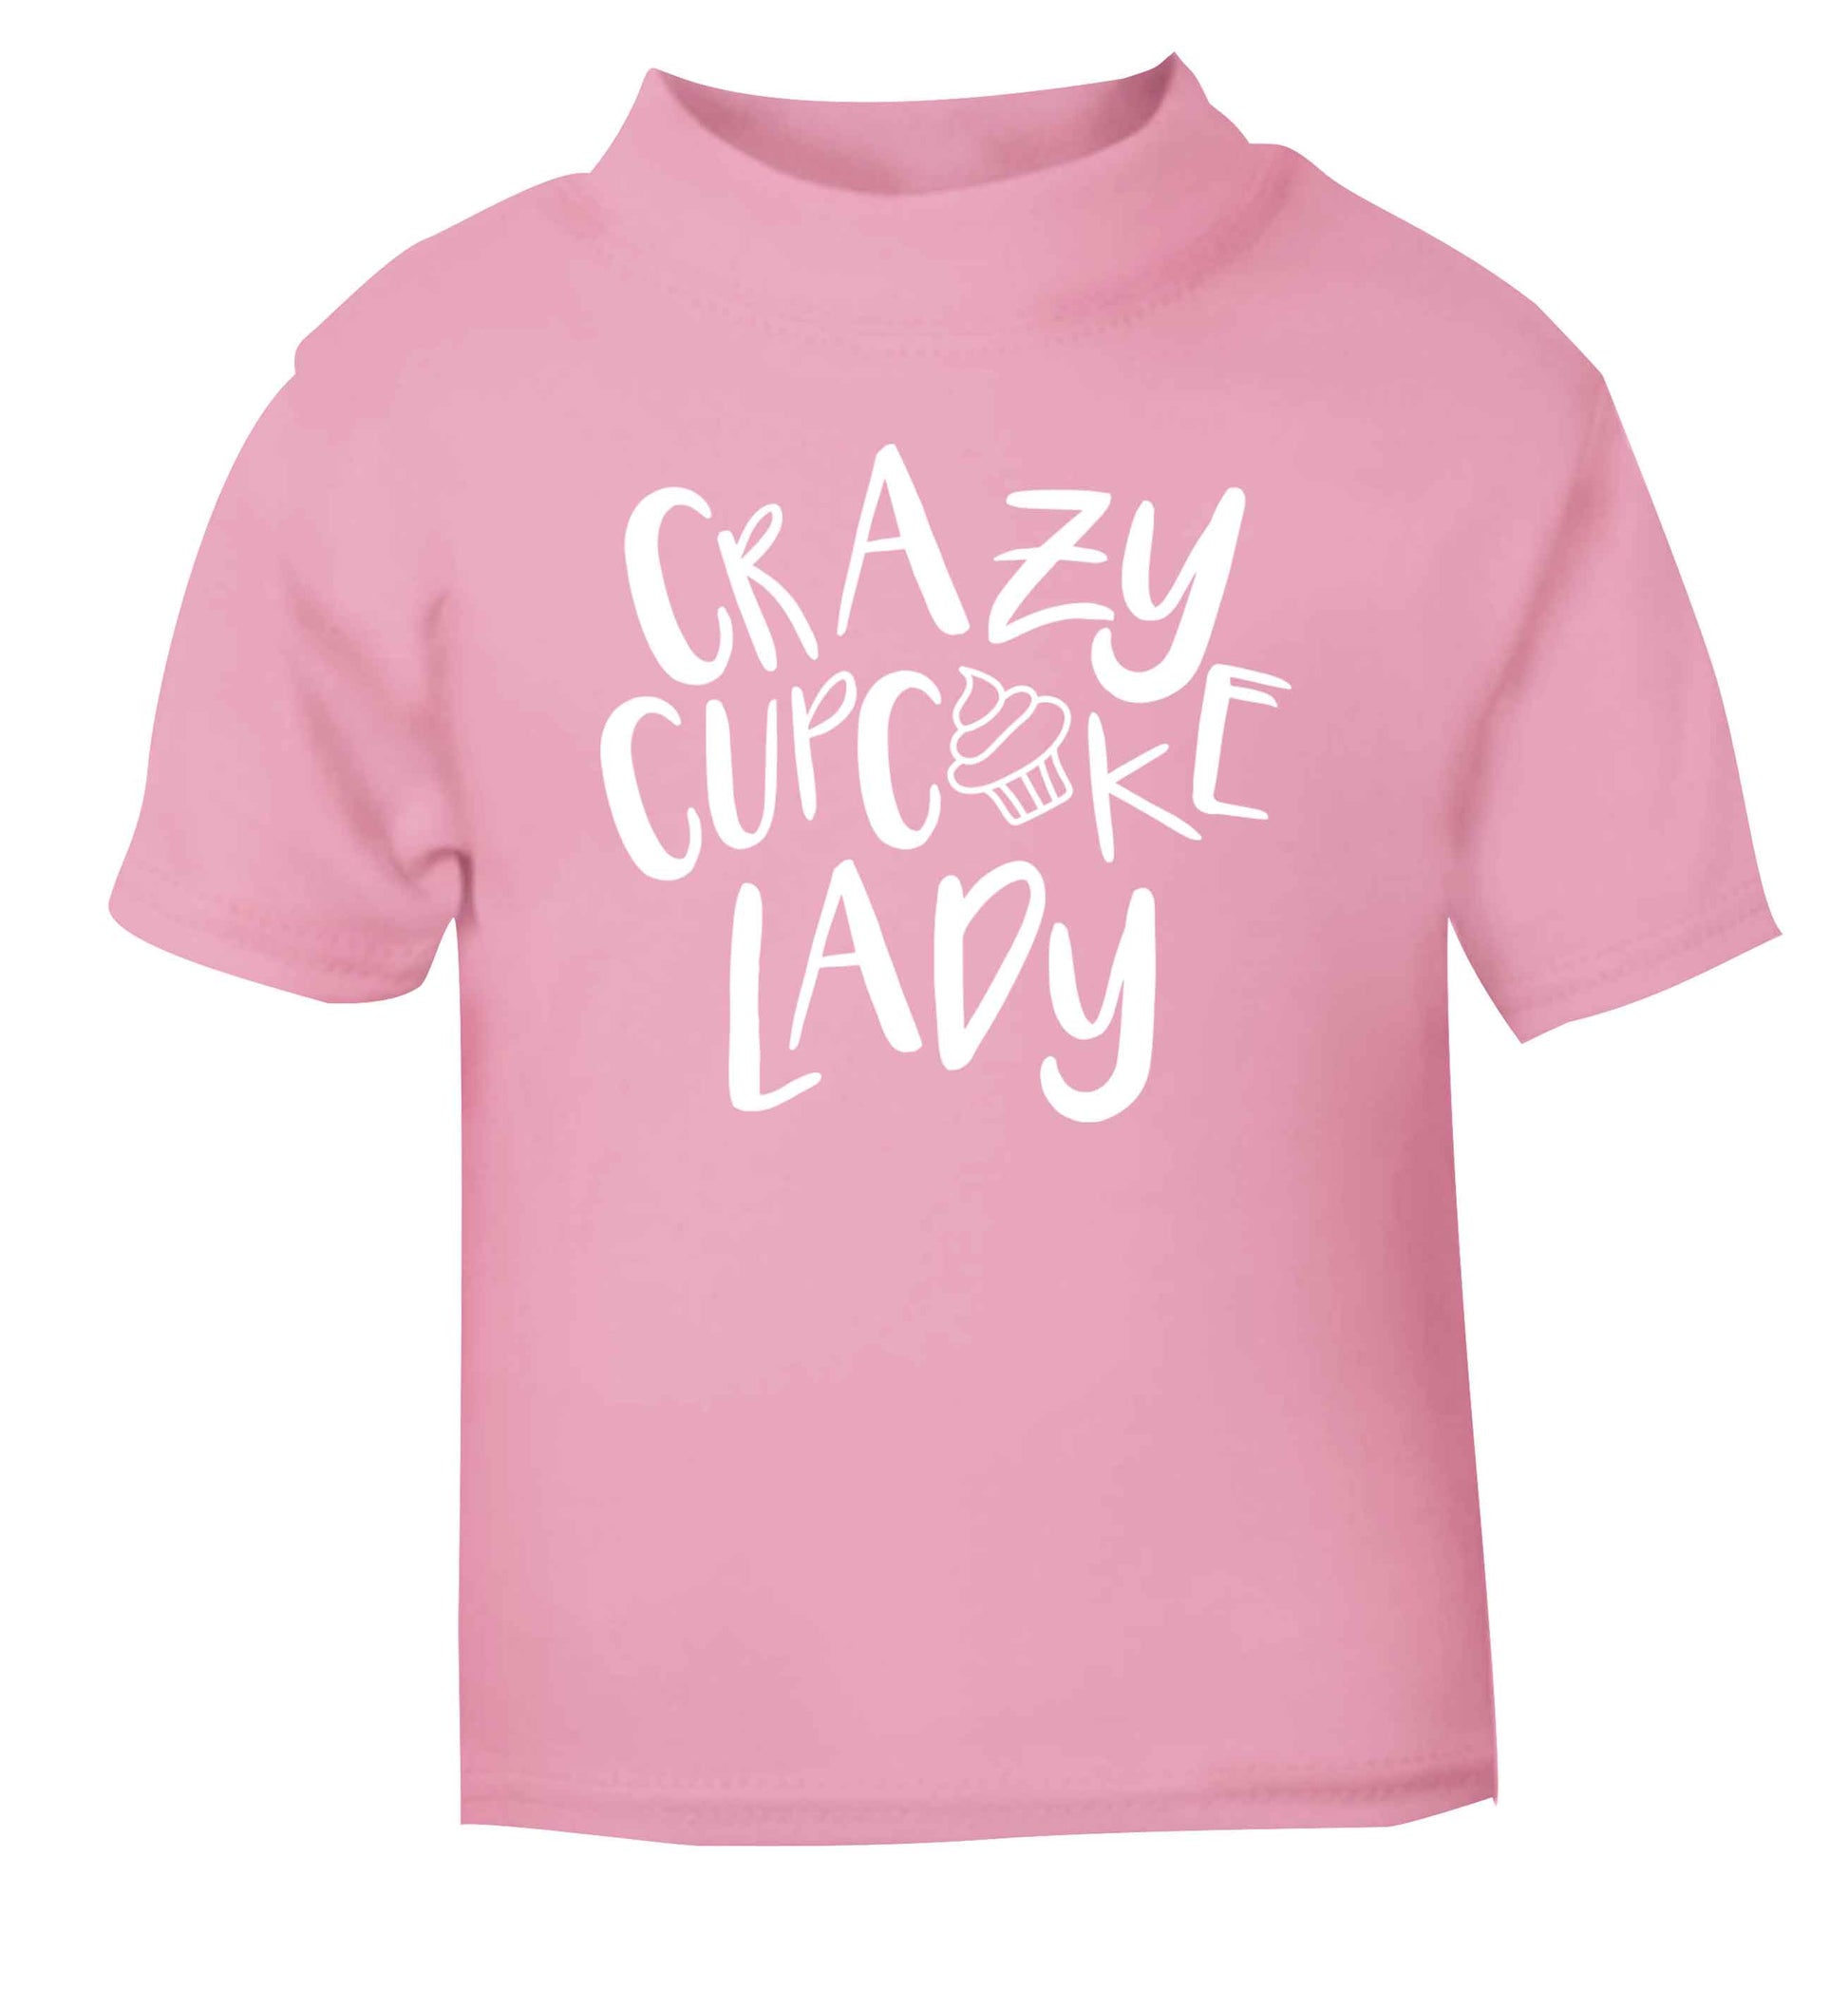 Crazy cupcake lady light pink Baby Toddler Tshirt 2 Years